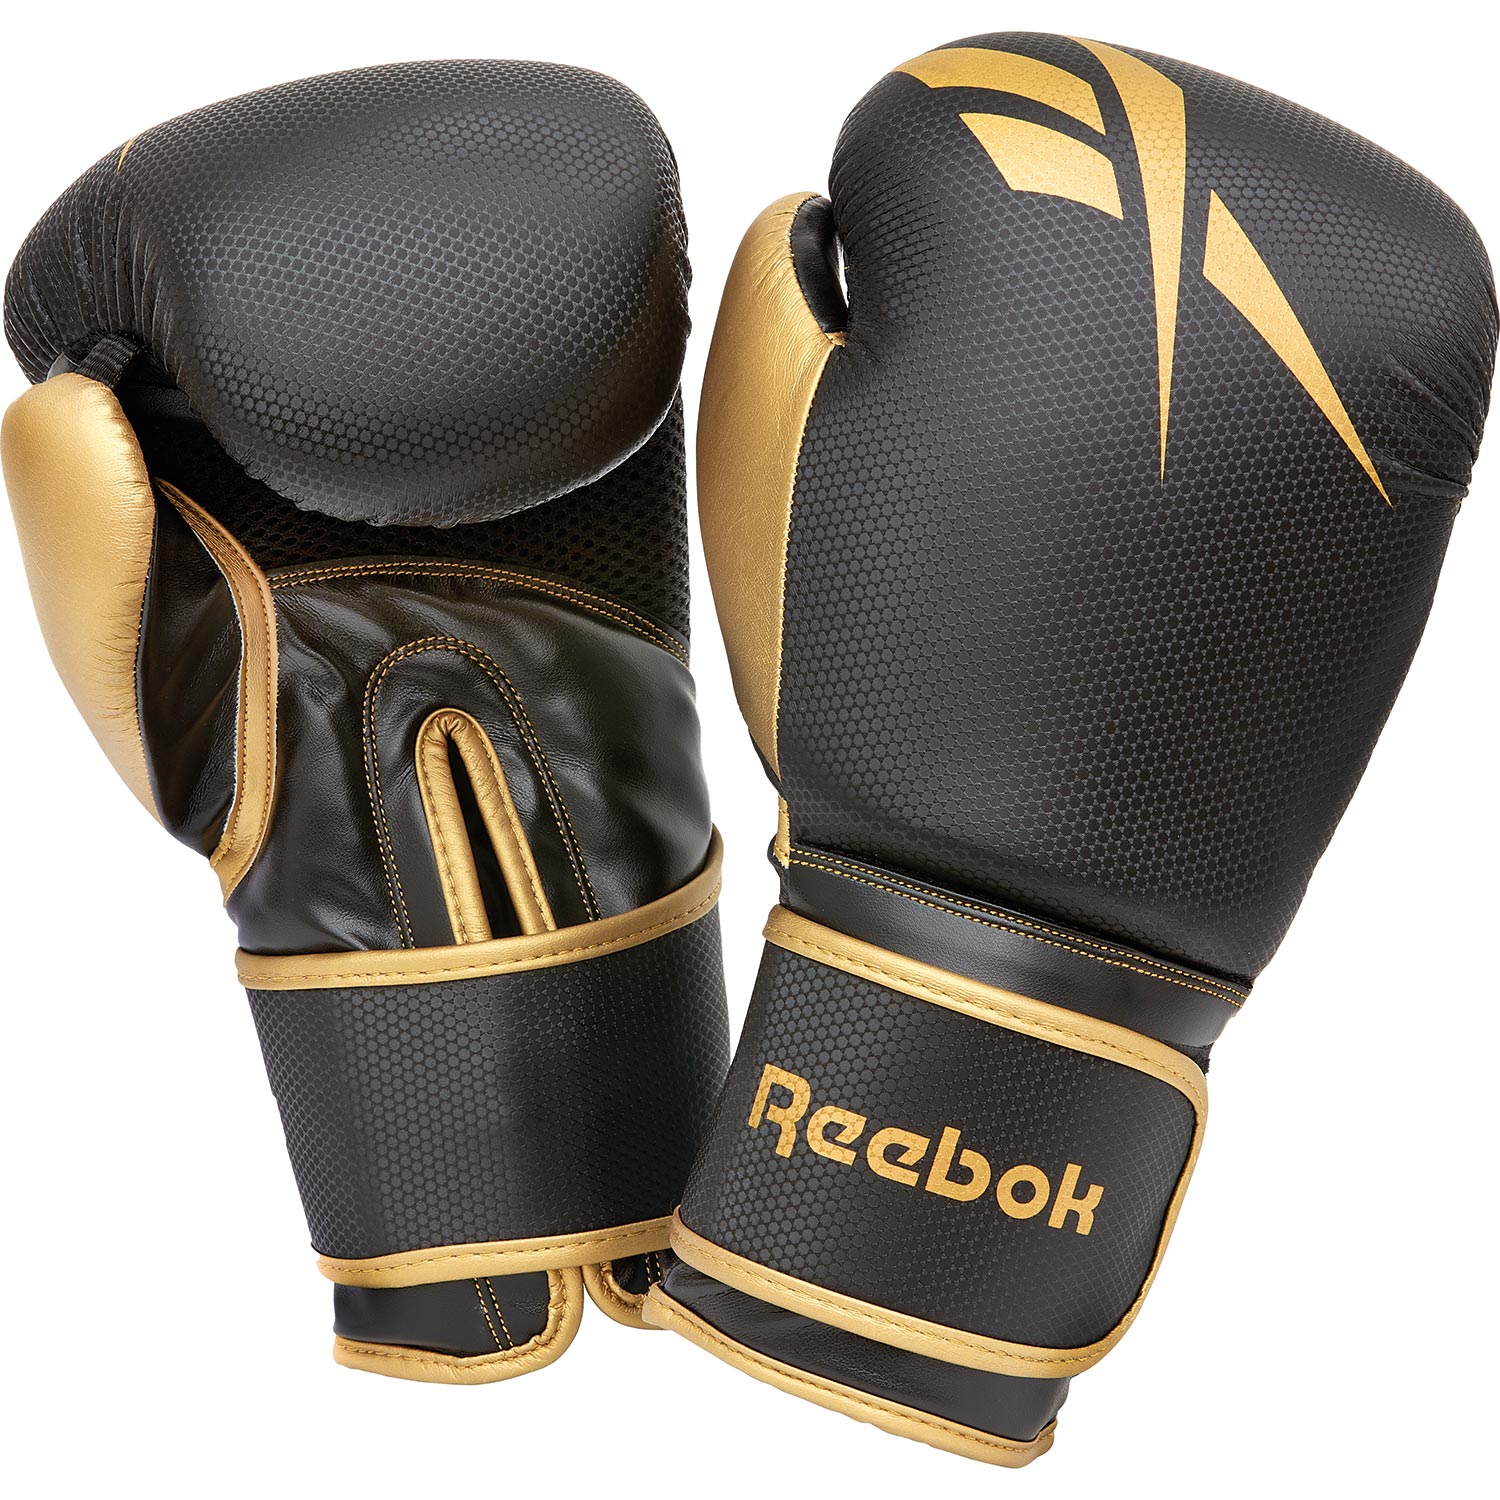 Reebok punch bag and gloves set